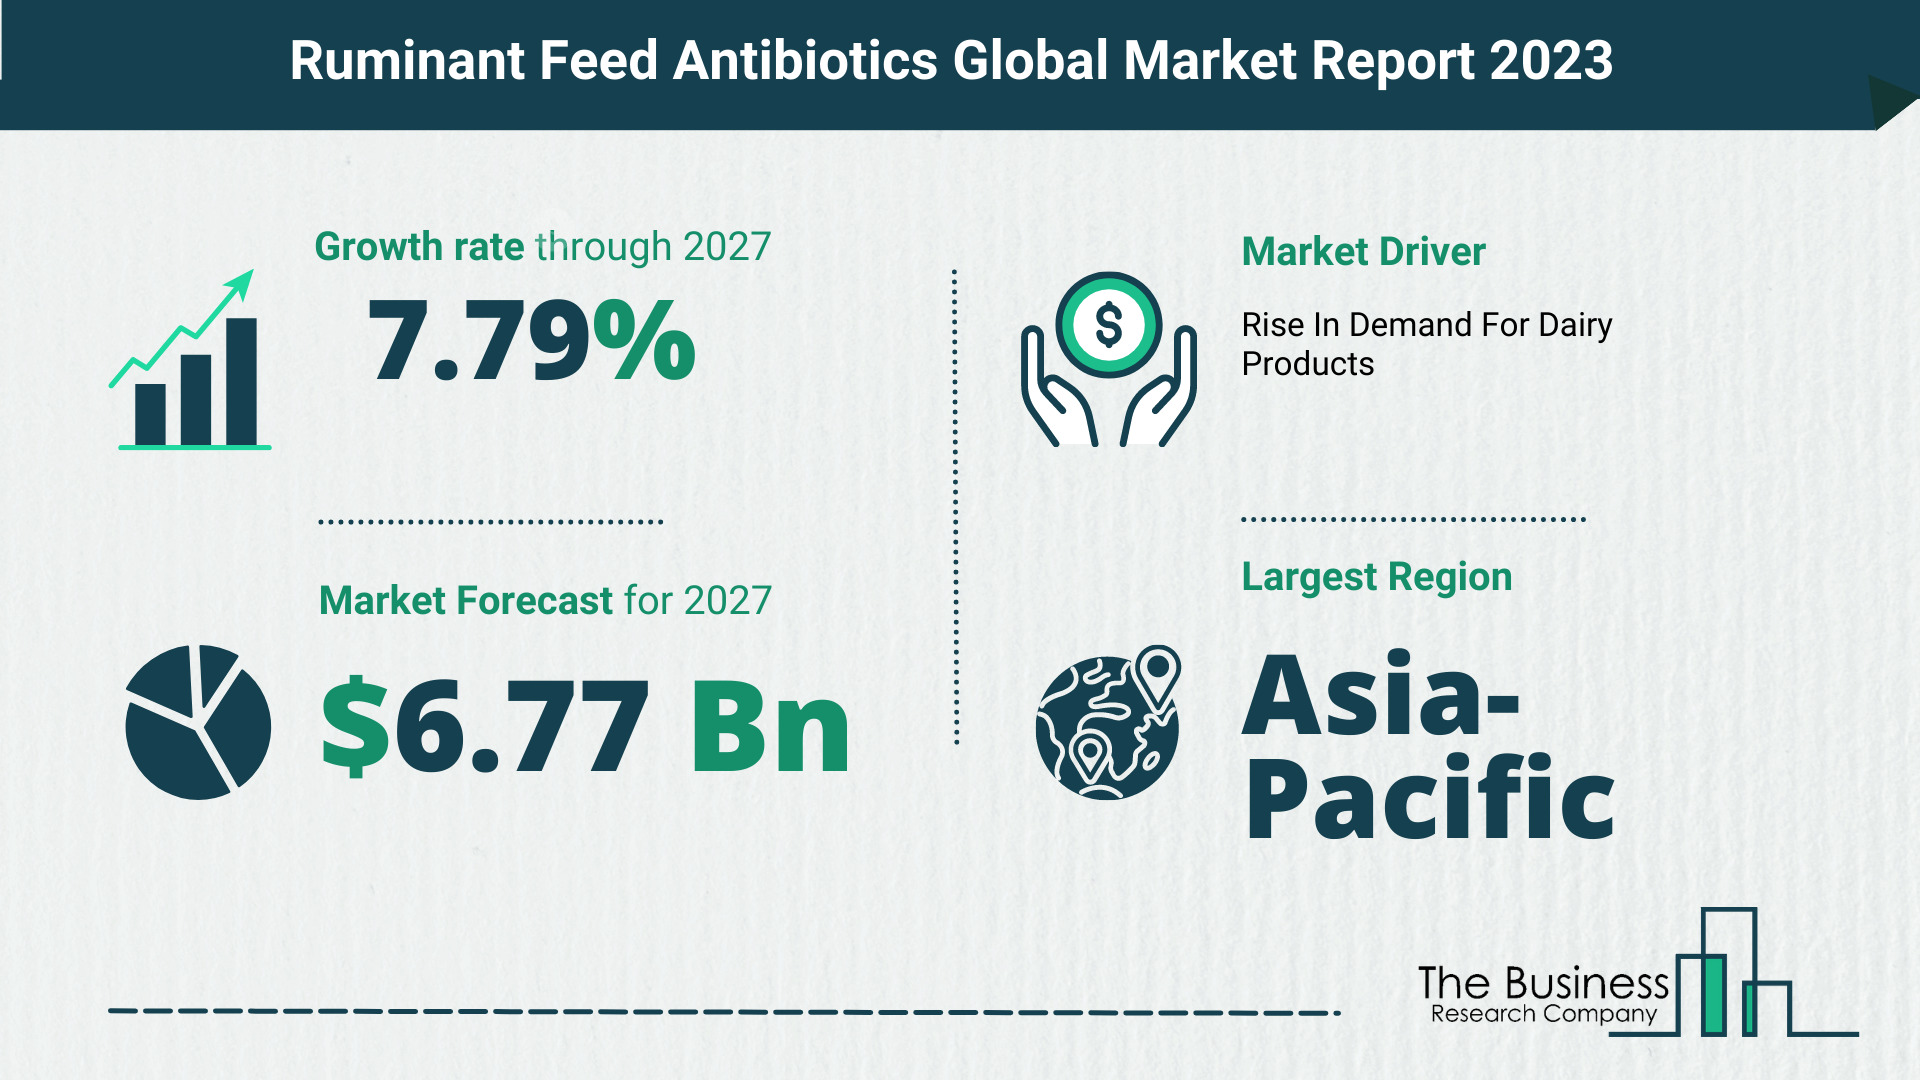 Global Ruminant Feed Antibiotics Market Size